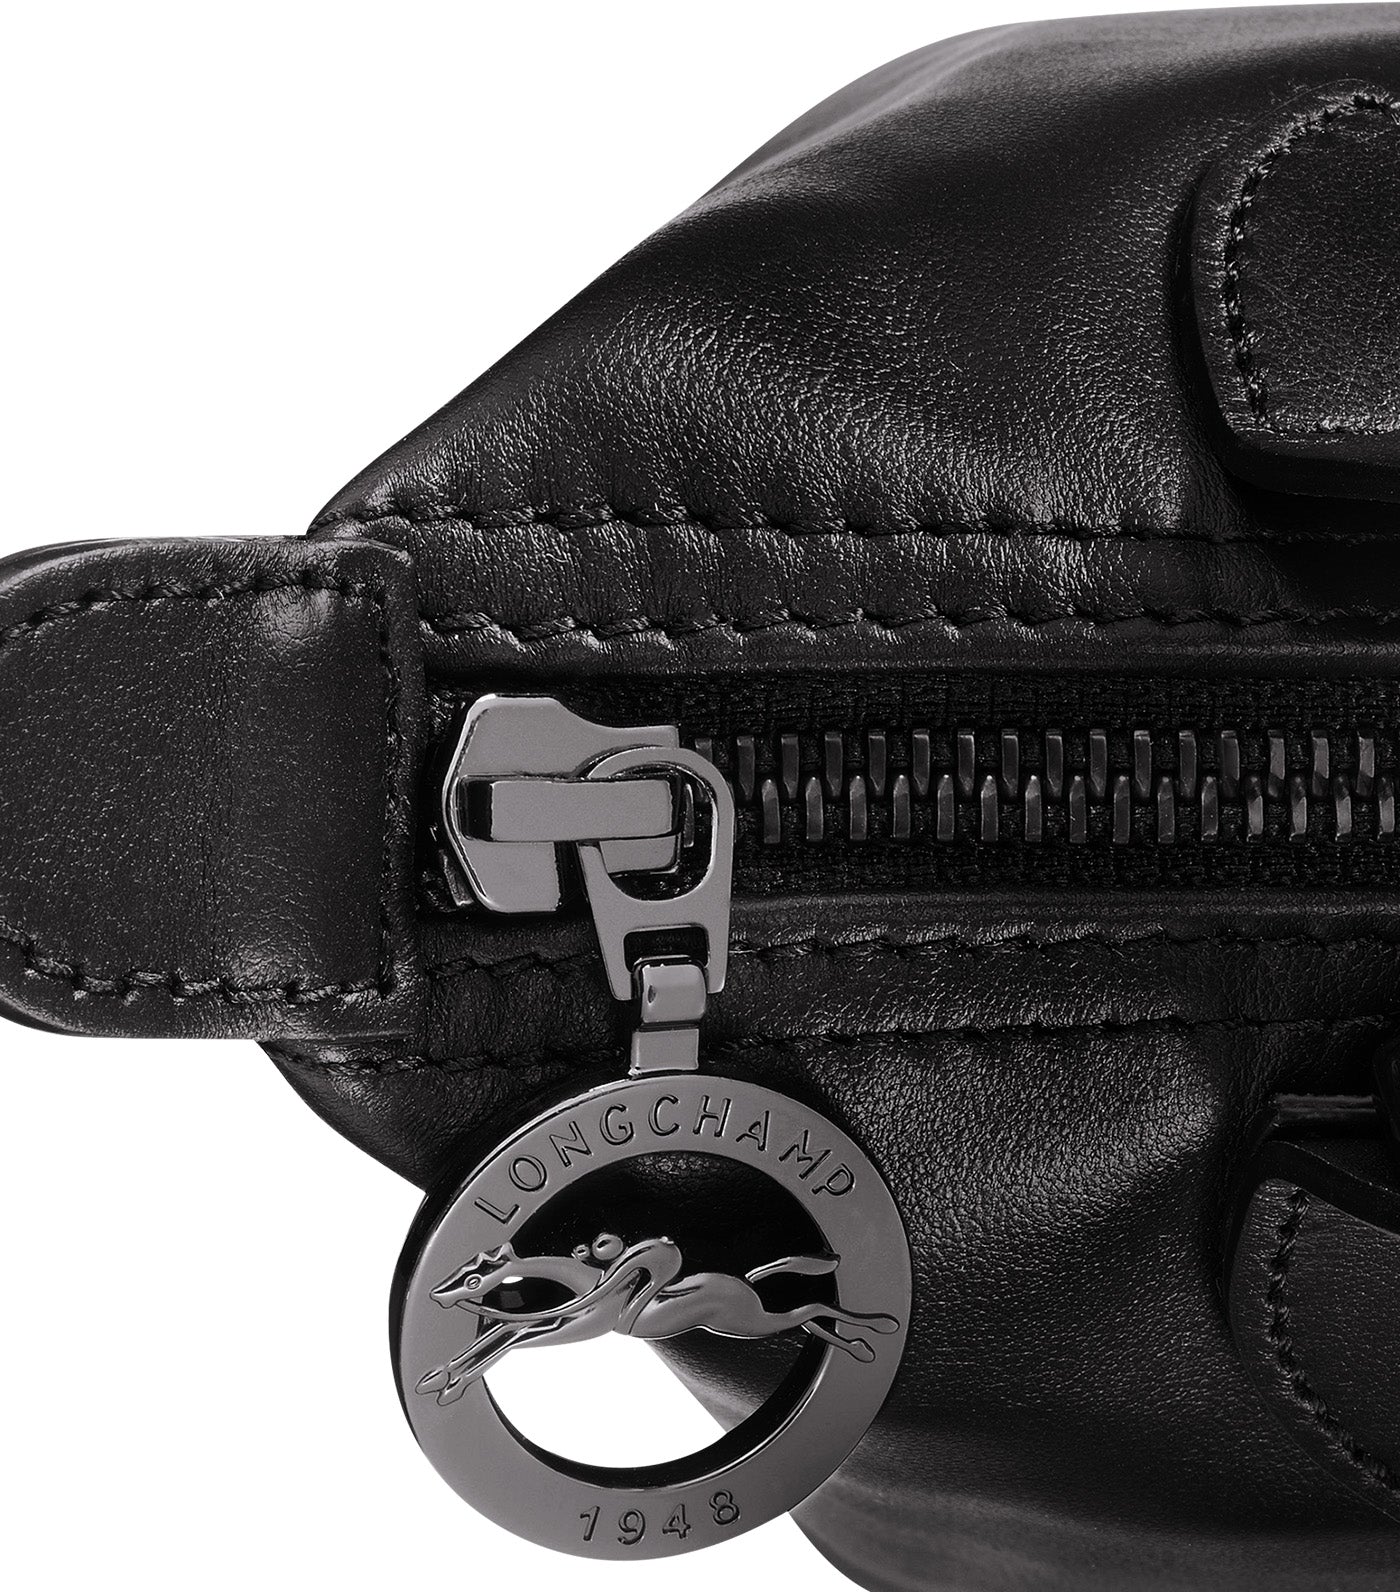 Original Longchamp LE PLIAGE XTRA Shoulder Hobo Bag M Cowhide Leather Tote  Bag